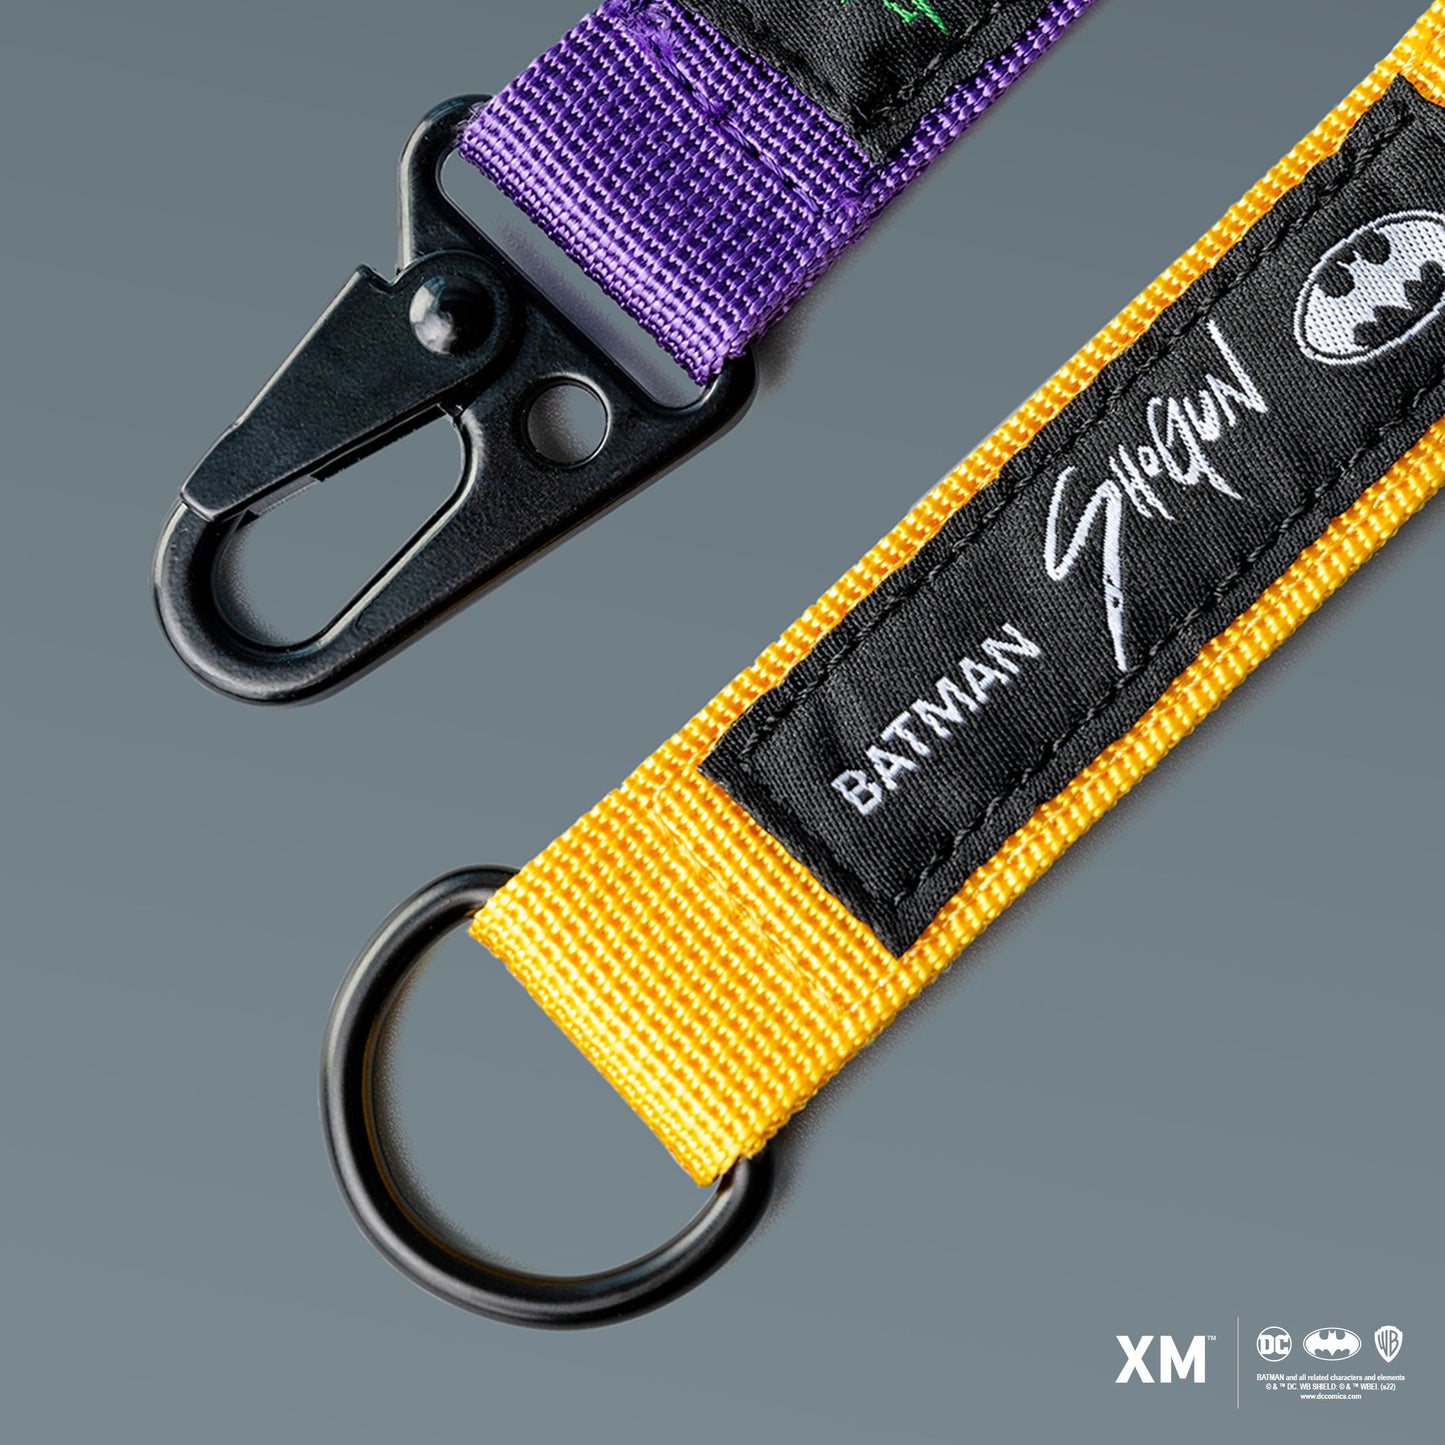 Batman Samurai Collection - Batman Shogun Utility Key Ring (Yellow)